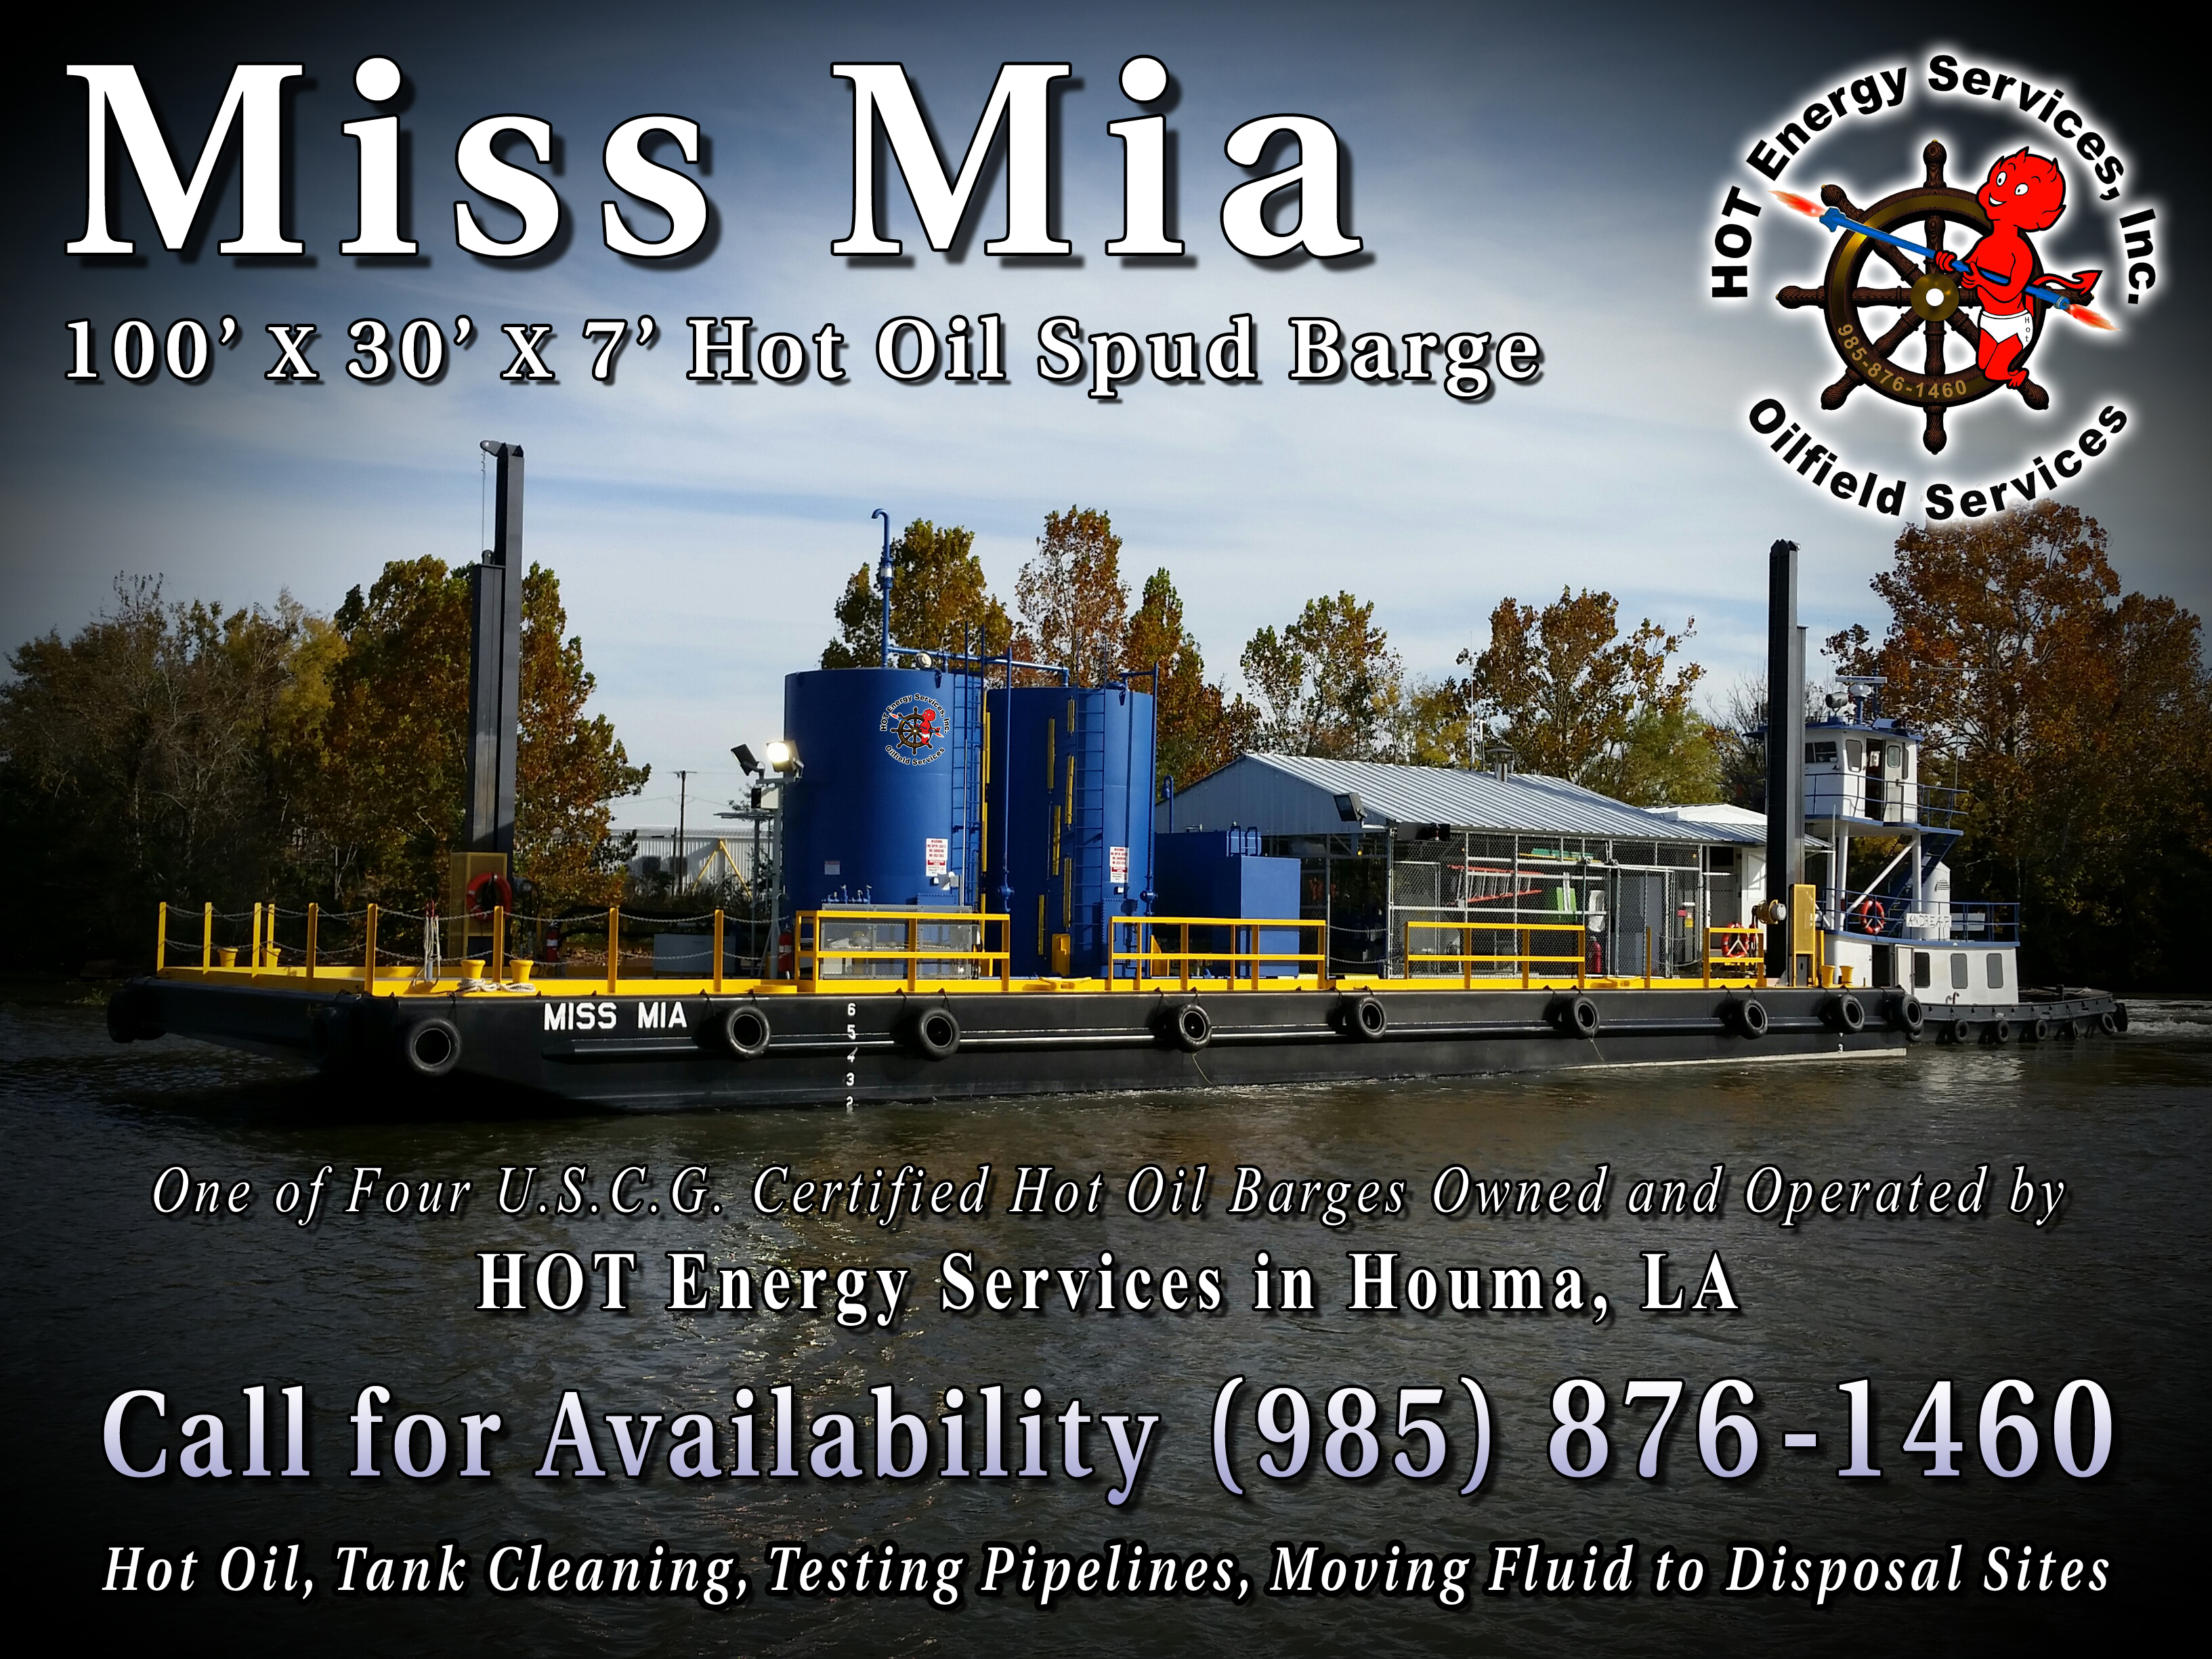 Miss Mia Hot Oil Spud Barge